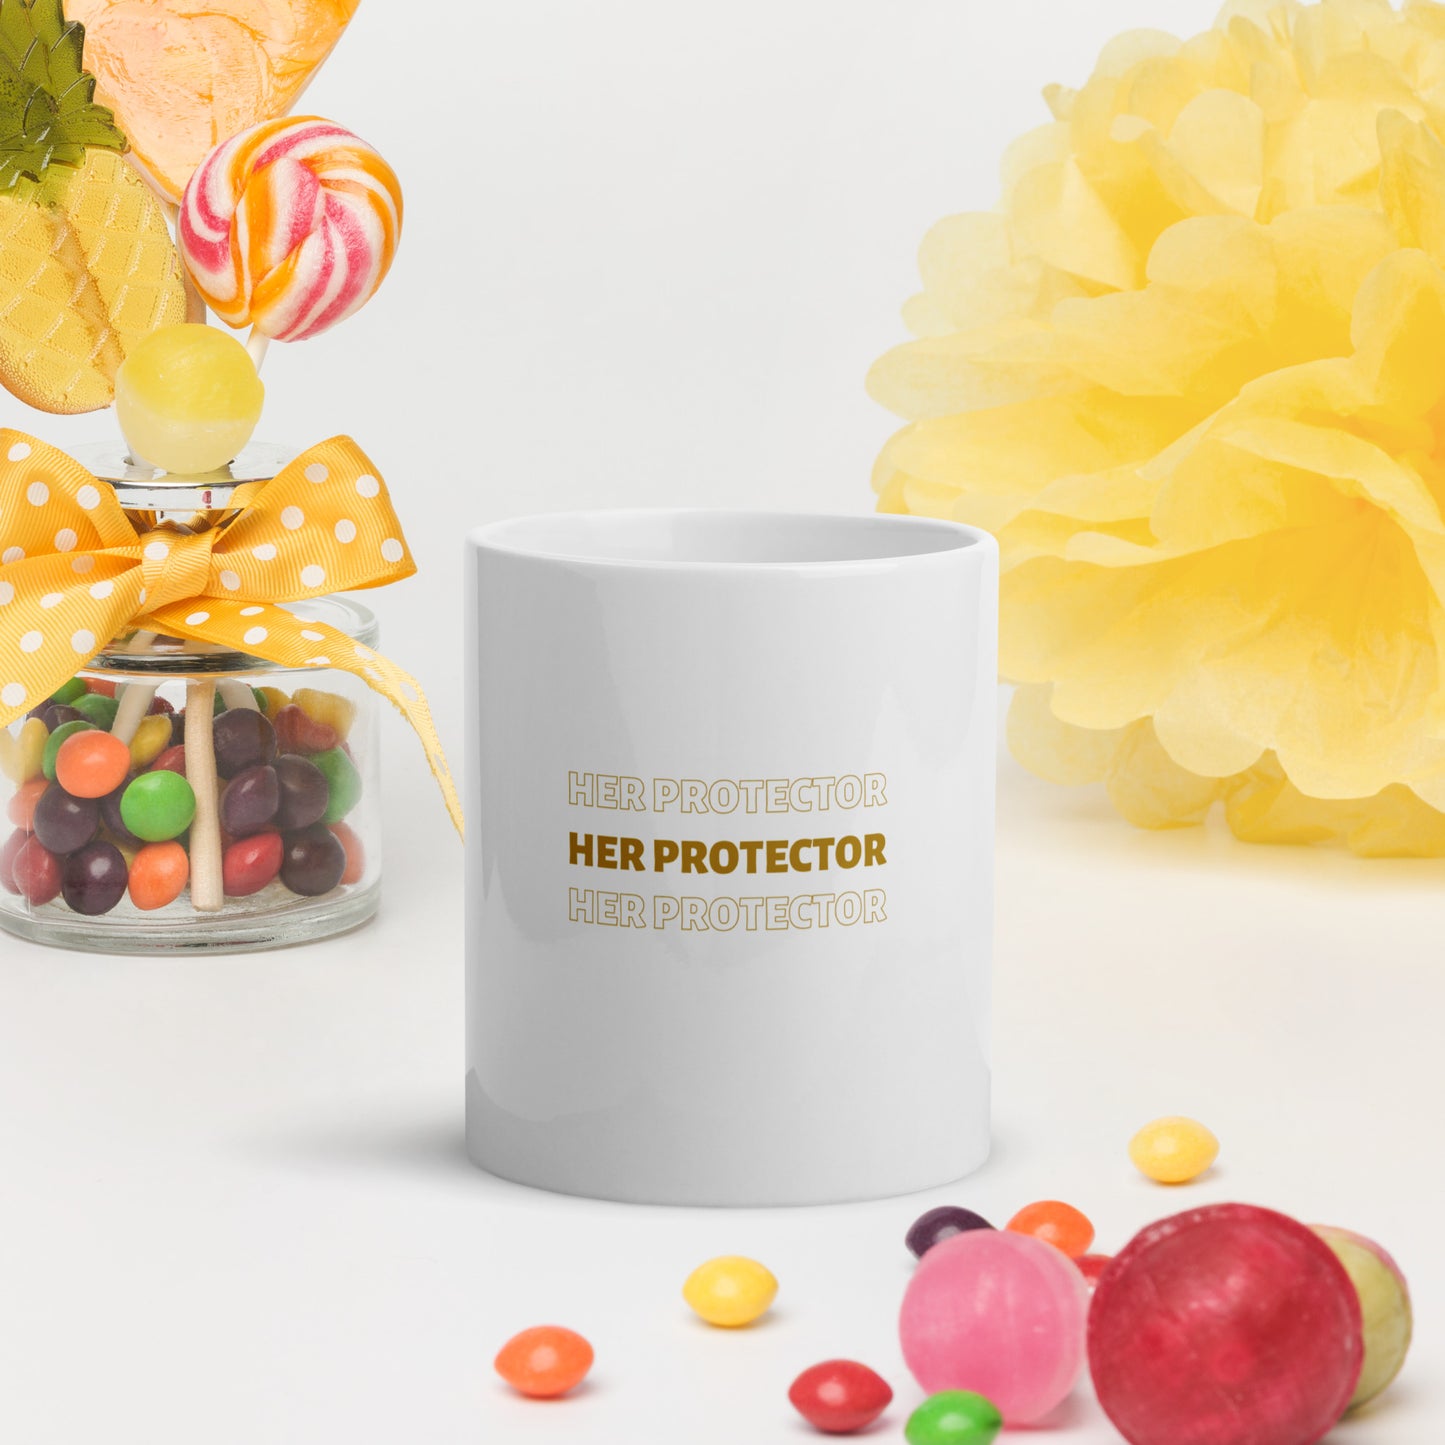 Her Protector - White glossy mug